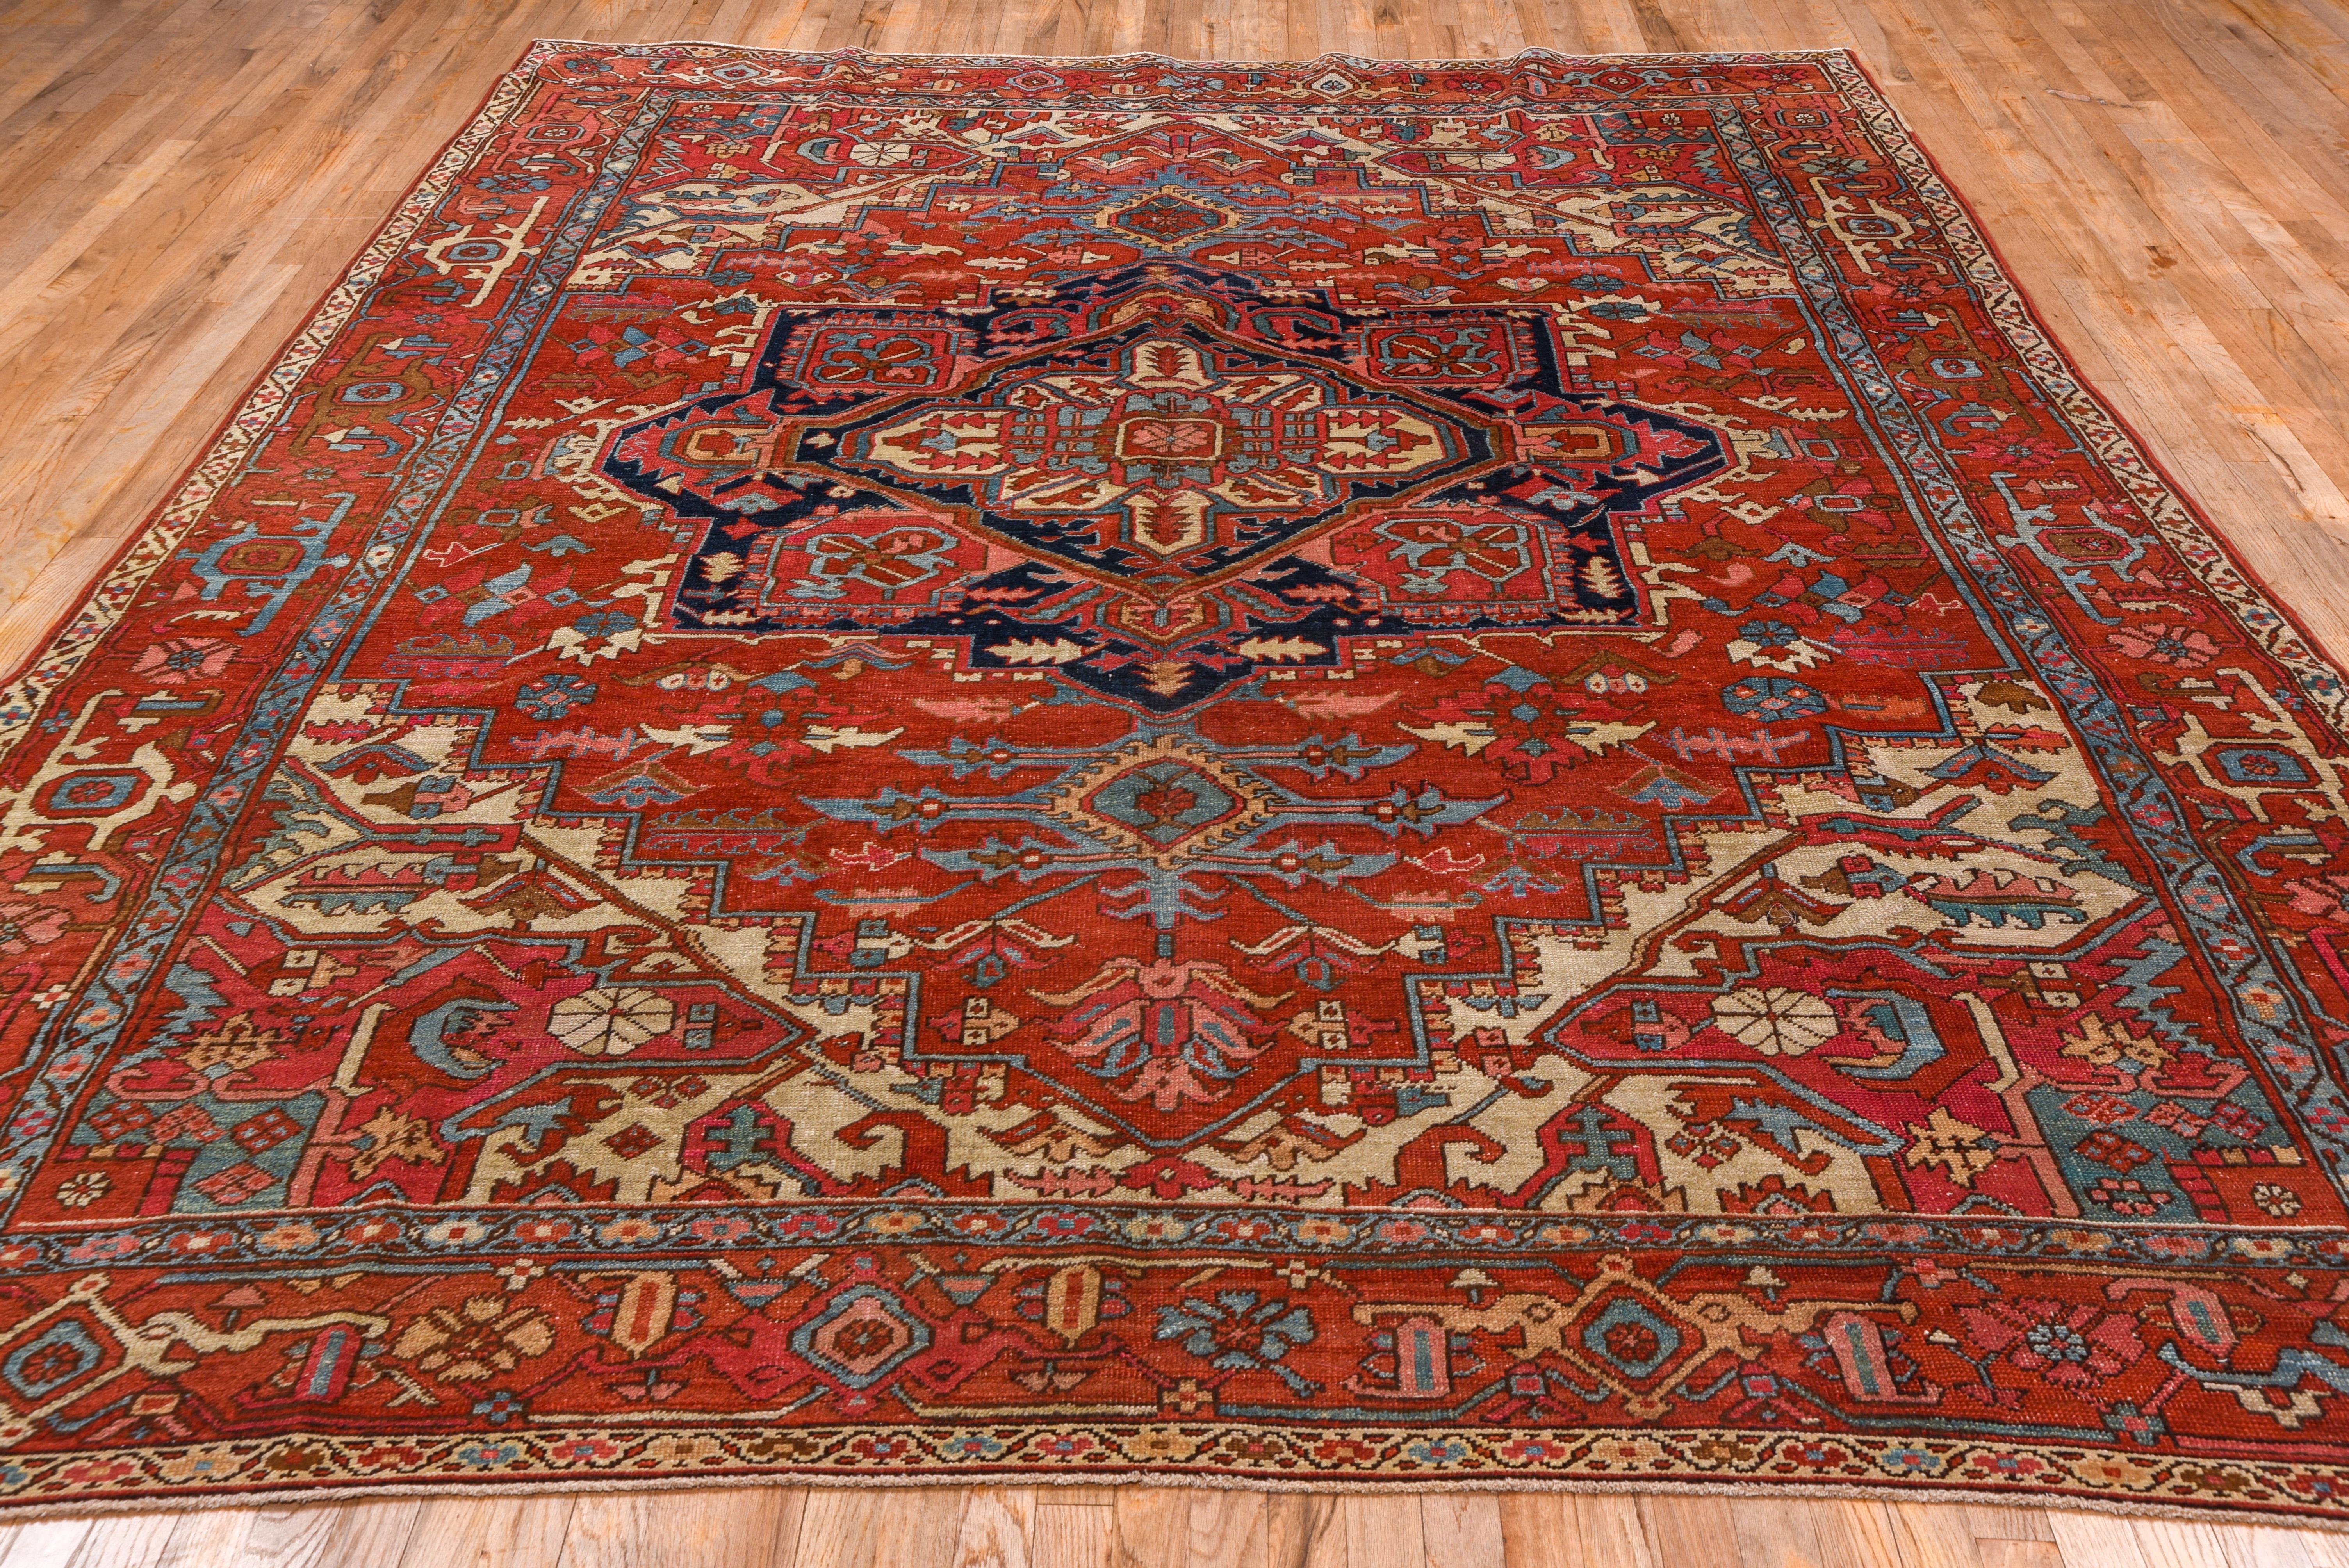 Wool Bright Red Authentic Persian Serapi Carpet